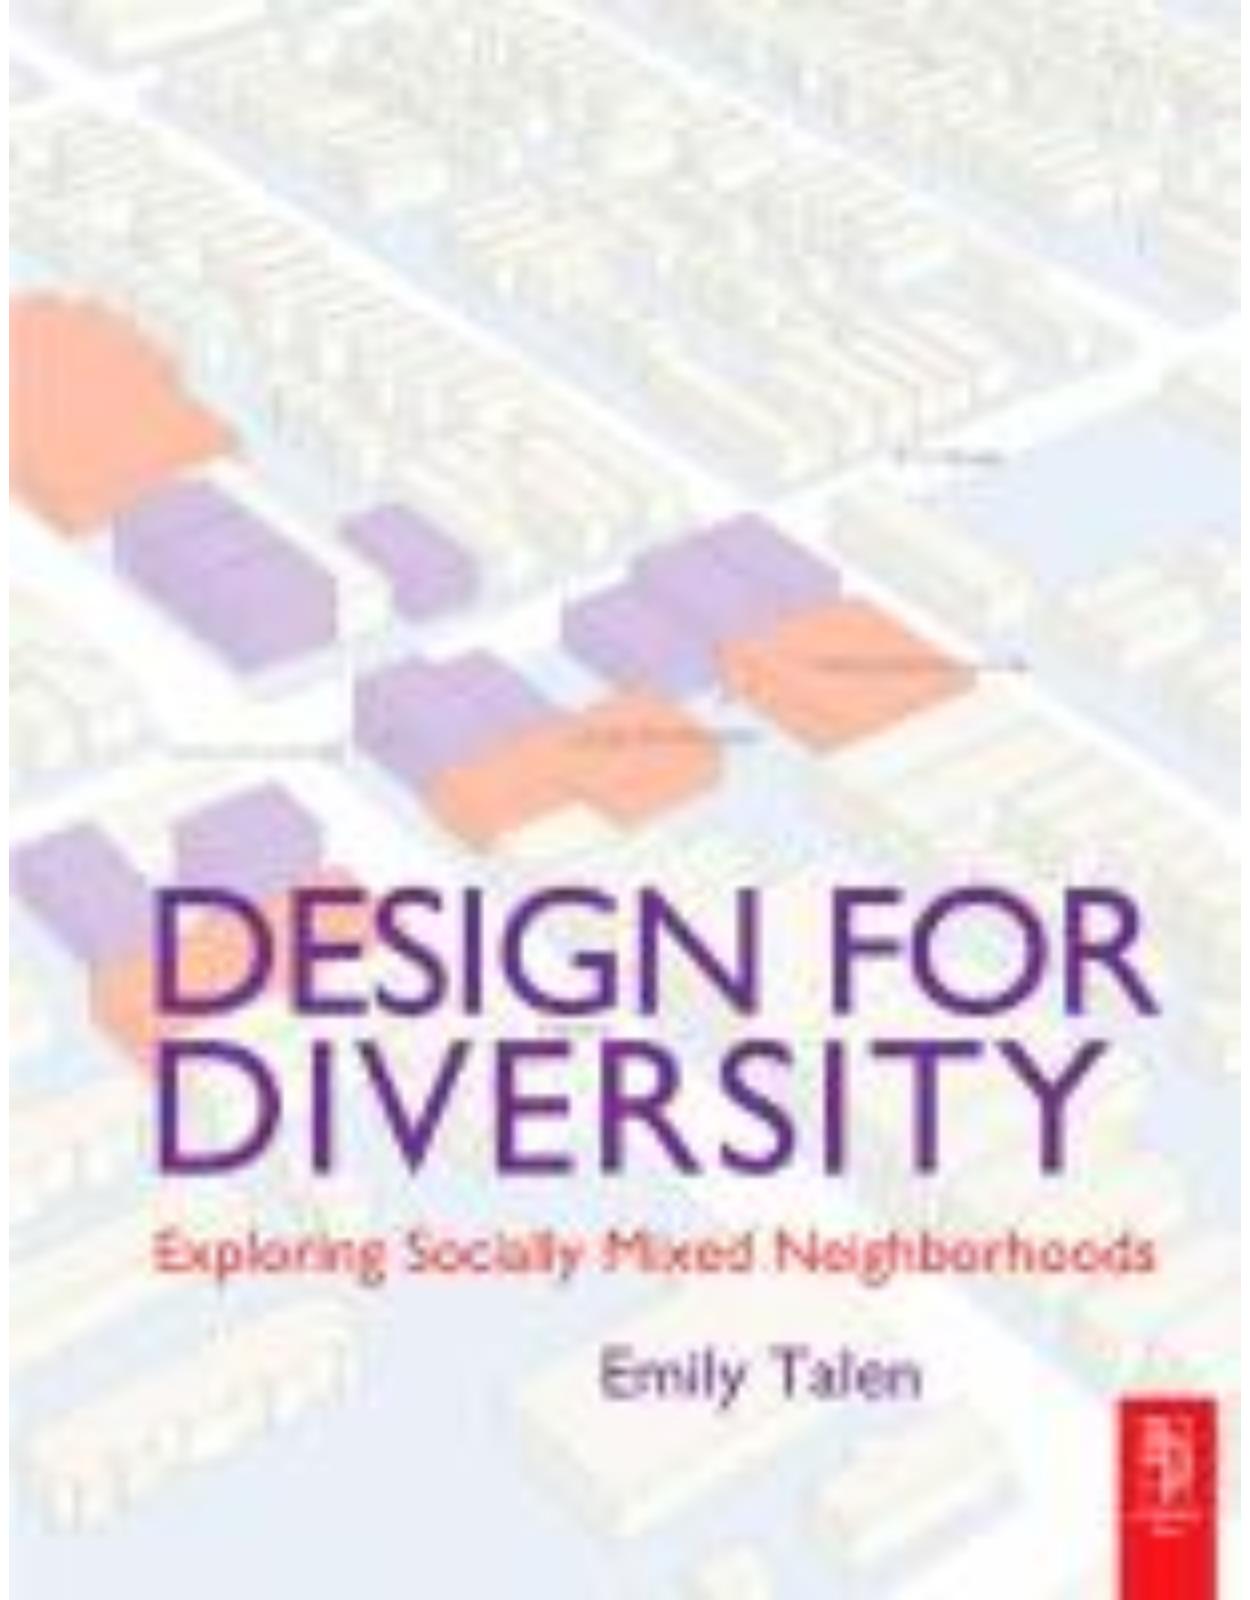 The Design of Diversity